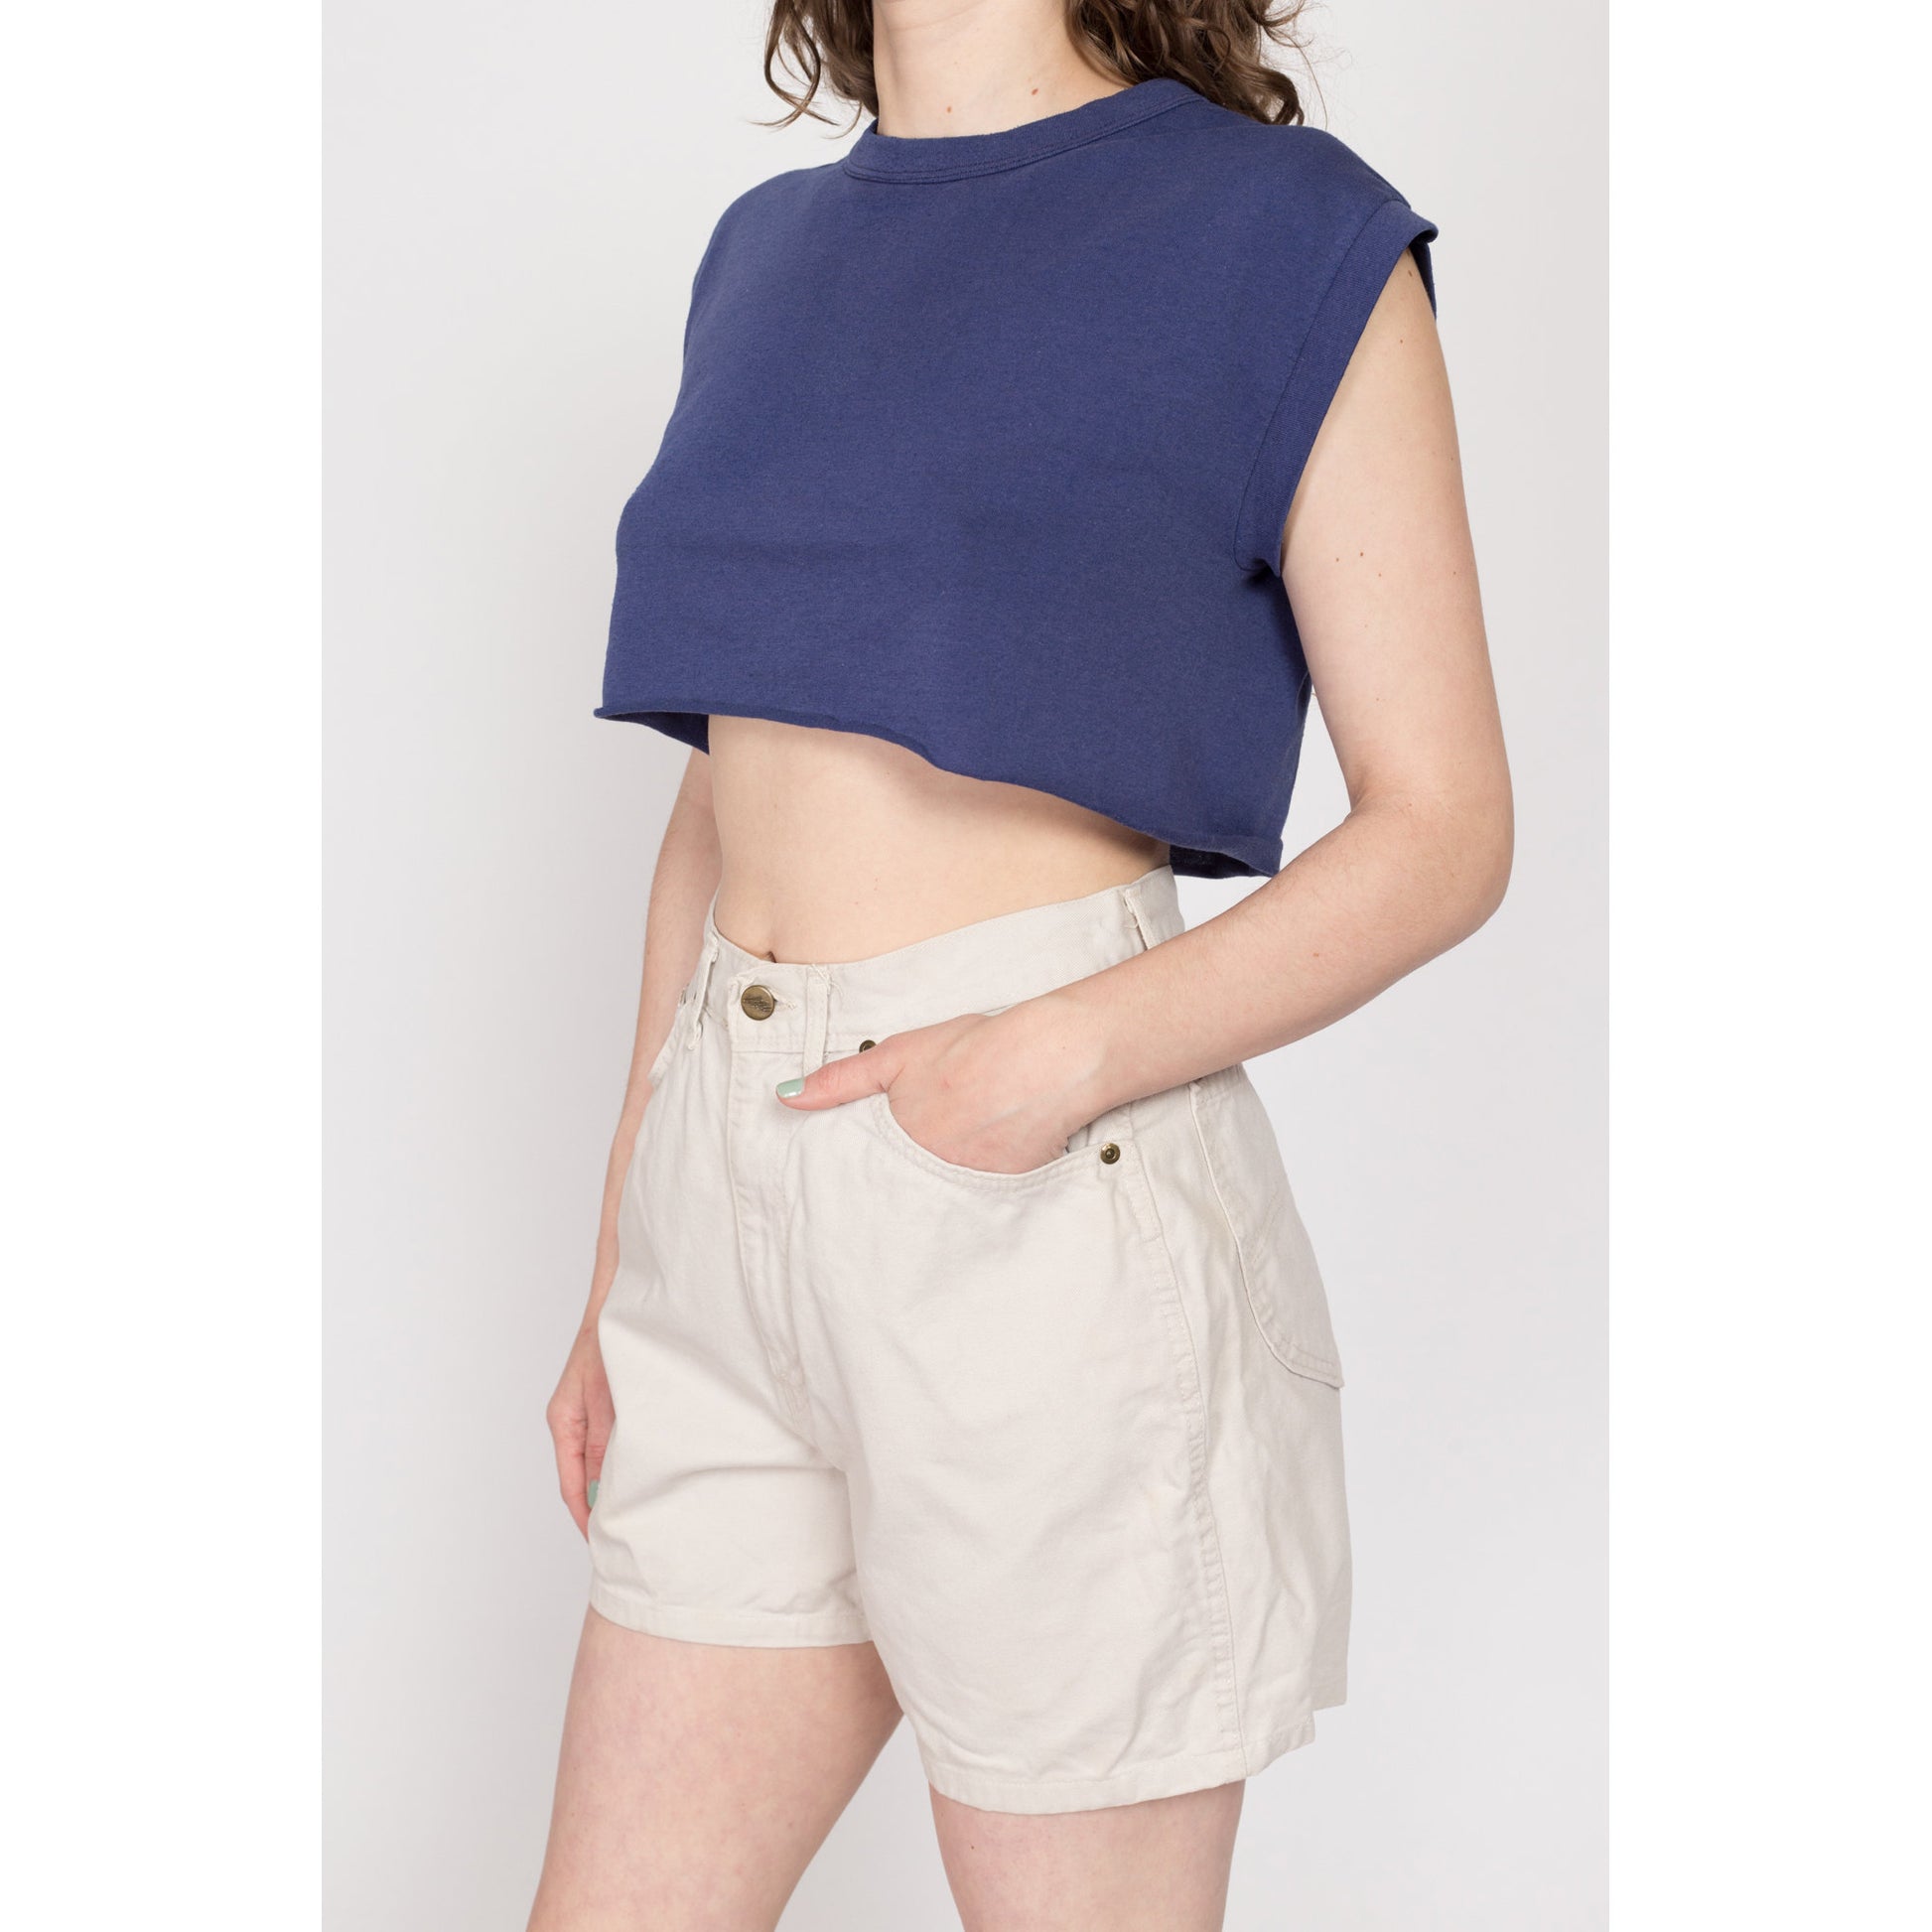 Medium 90s Khaki High Waisted Shorts 29" | Vintage Chic Brand Casual Cotton Shorts